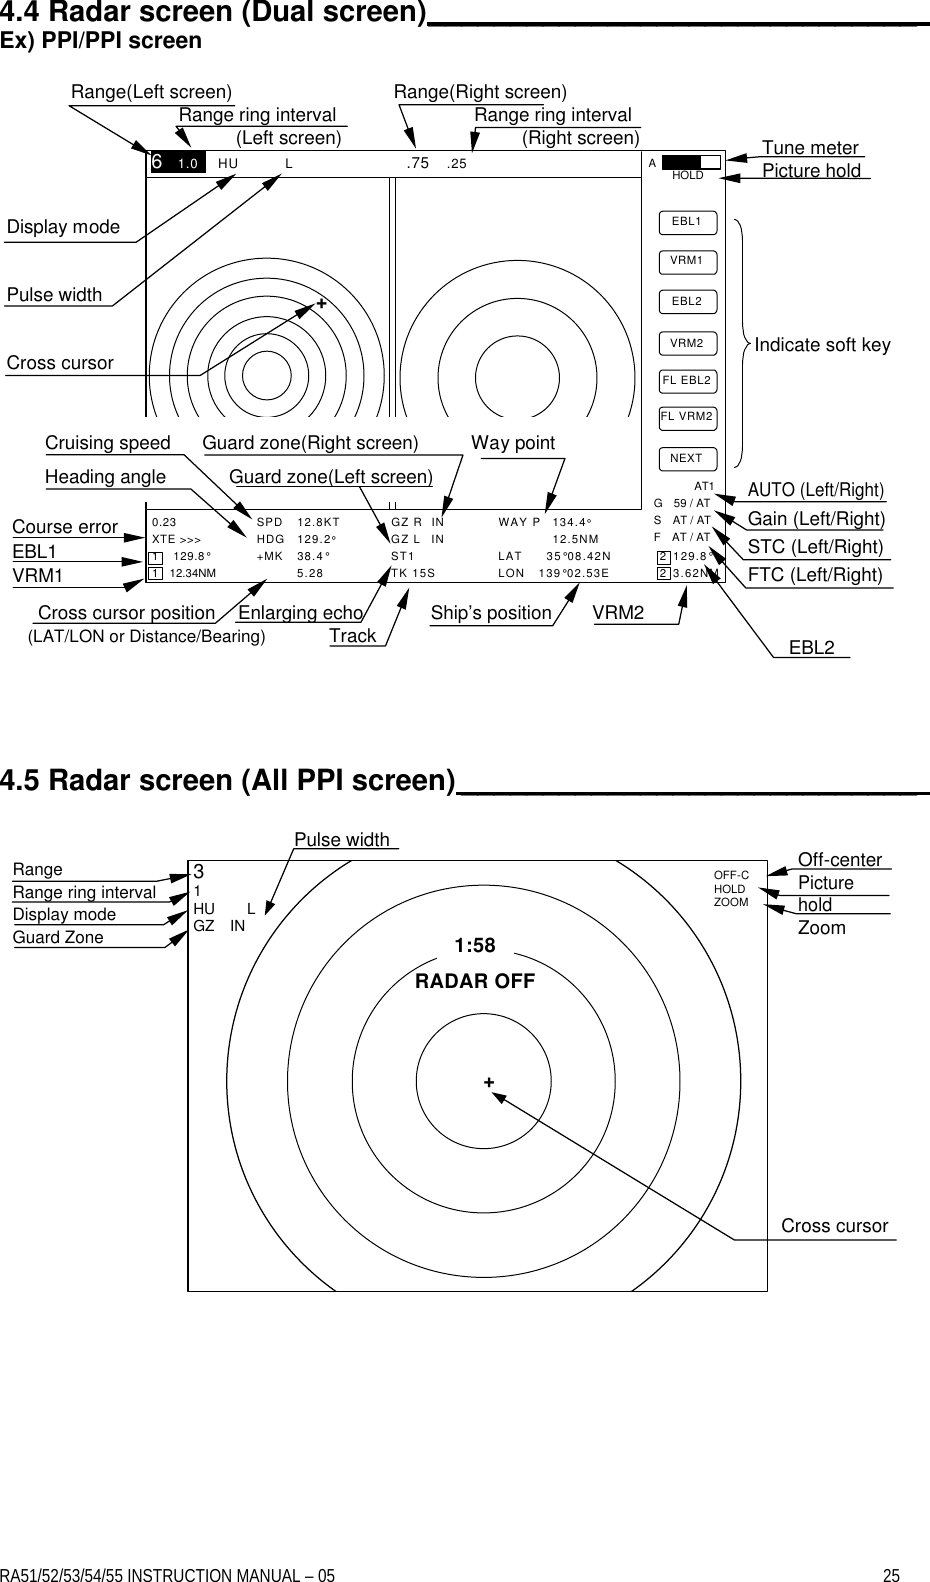 RA51/52/53/54/55 INSTRUCTION MANUAL – 05    25 4.4 Radar screen (Dual screen)______________________________  Ex) PPI/PPI screen     4.5 Radar screen (All PPI screen) ____________________________      Tune meter Picture hold Indicate soft key SPD 12.8KT GZ R IN WAY P 134.4° HDG 129.2° GZ L IN    12.5NM +MK 38.4° ST1 LAT  35°08.42N 2 129.8°  5.28 TK 15S LON 139°02.53E 2 3.62NM 6 1.0_ HU L .75 .25 EBL1 VRM1 EBL2 VRM2 FL EBL2 FL VRM2 NEXT A HOLD 0.23 XTE &gt;&gt;&gt; 1  129.8° 1  12.34NM  AT1 G  59 / AT S  AT / AT F  AT / AT Range(Left screen) Range(Right screen)  Range ring interval Range ring interval        (Left screen)      (Right screen) Display mode  Pulse width  Cross cursor Course error EBL1 VRM1 + Cruising speed Guard zone(Right screen) Way point Heading angle Guard zone(Left screen)  Cross cursor position Enlarging echo Ship’s position VRM2 (LAT/LON or Distance/Bearing) Track EBL2 AUTO (Left/Right) Gain (Left/Right) STC (Left/Right) FTC (Left/Right)   3 1 HU L GZ  IN 1:58 + RADAR OFF OFF-C HOLD ZOOM Off-center Picture hold Zoom Range Range ring interval Display mode Guard Zone  Pulse width Cross cursor   